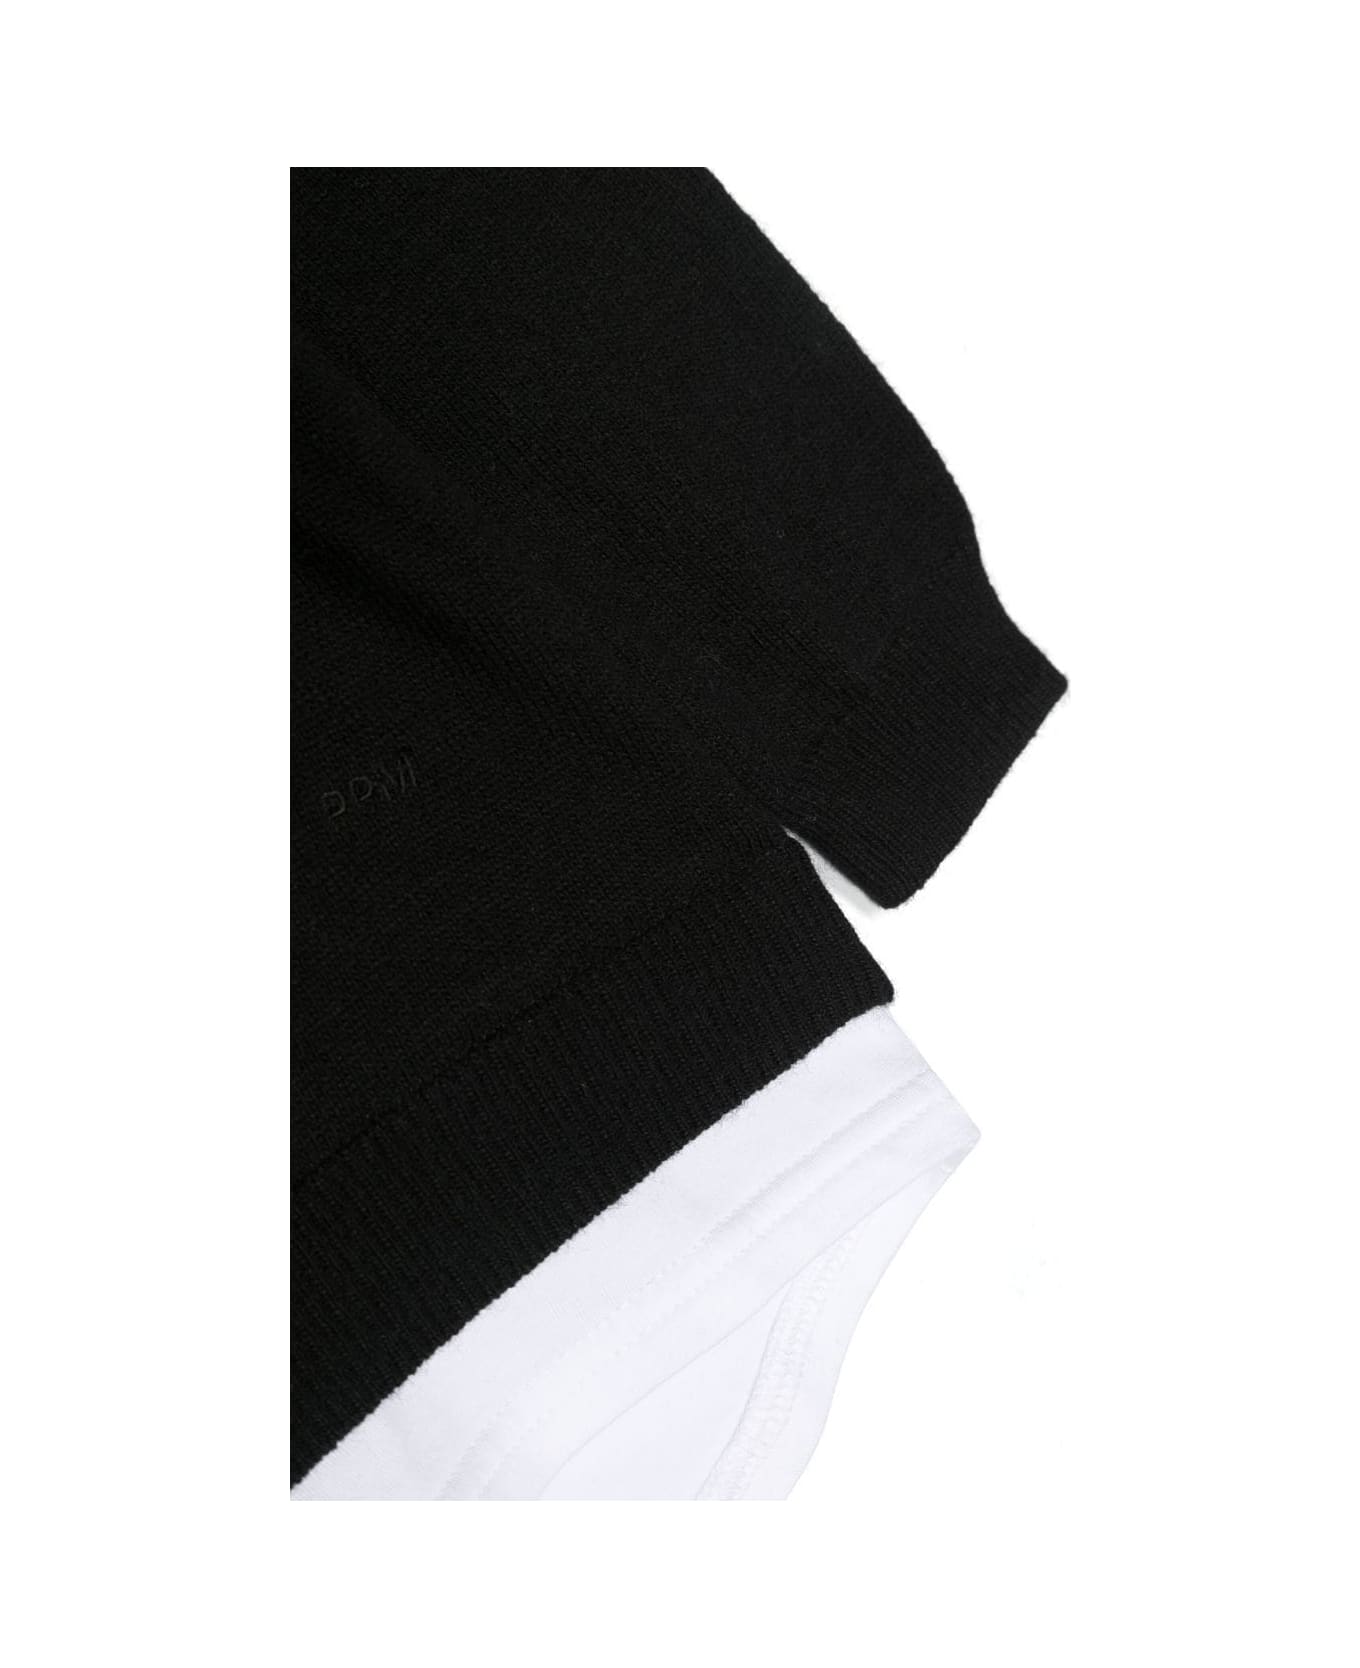 Paolo Pecora Two-tone Layered Sweatshirt - Black